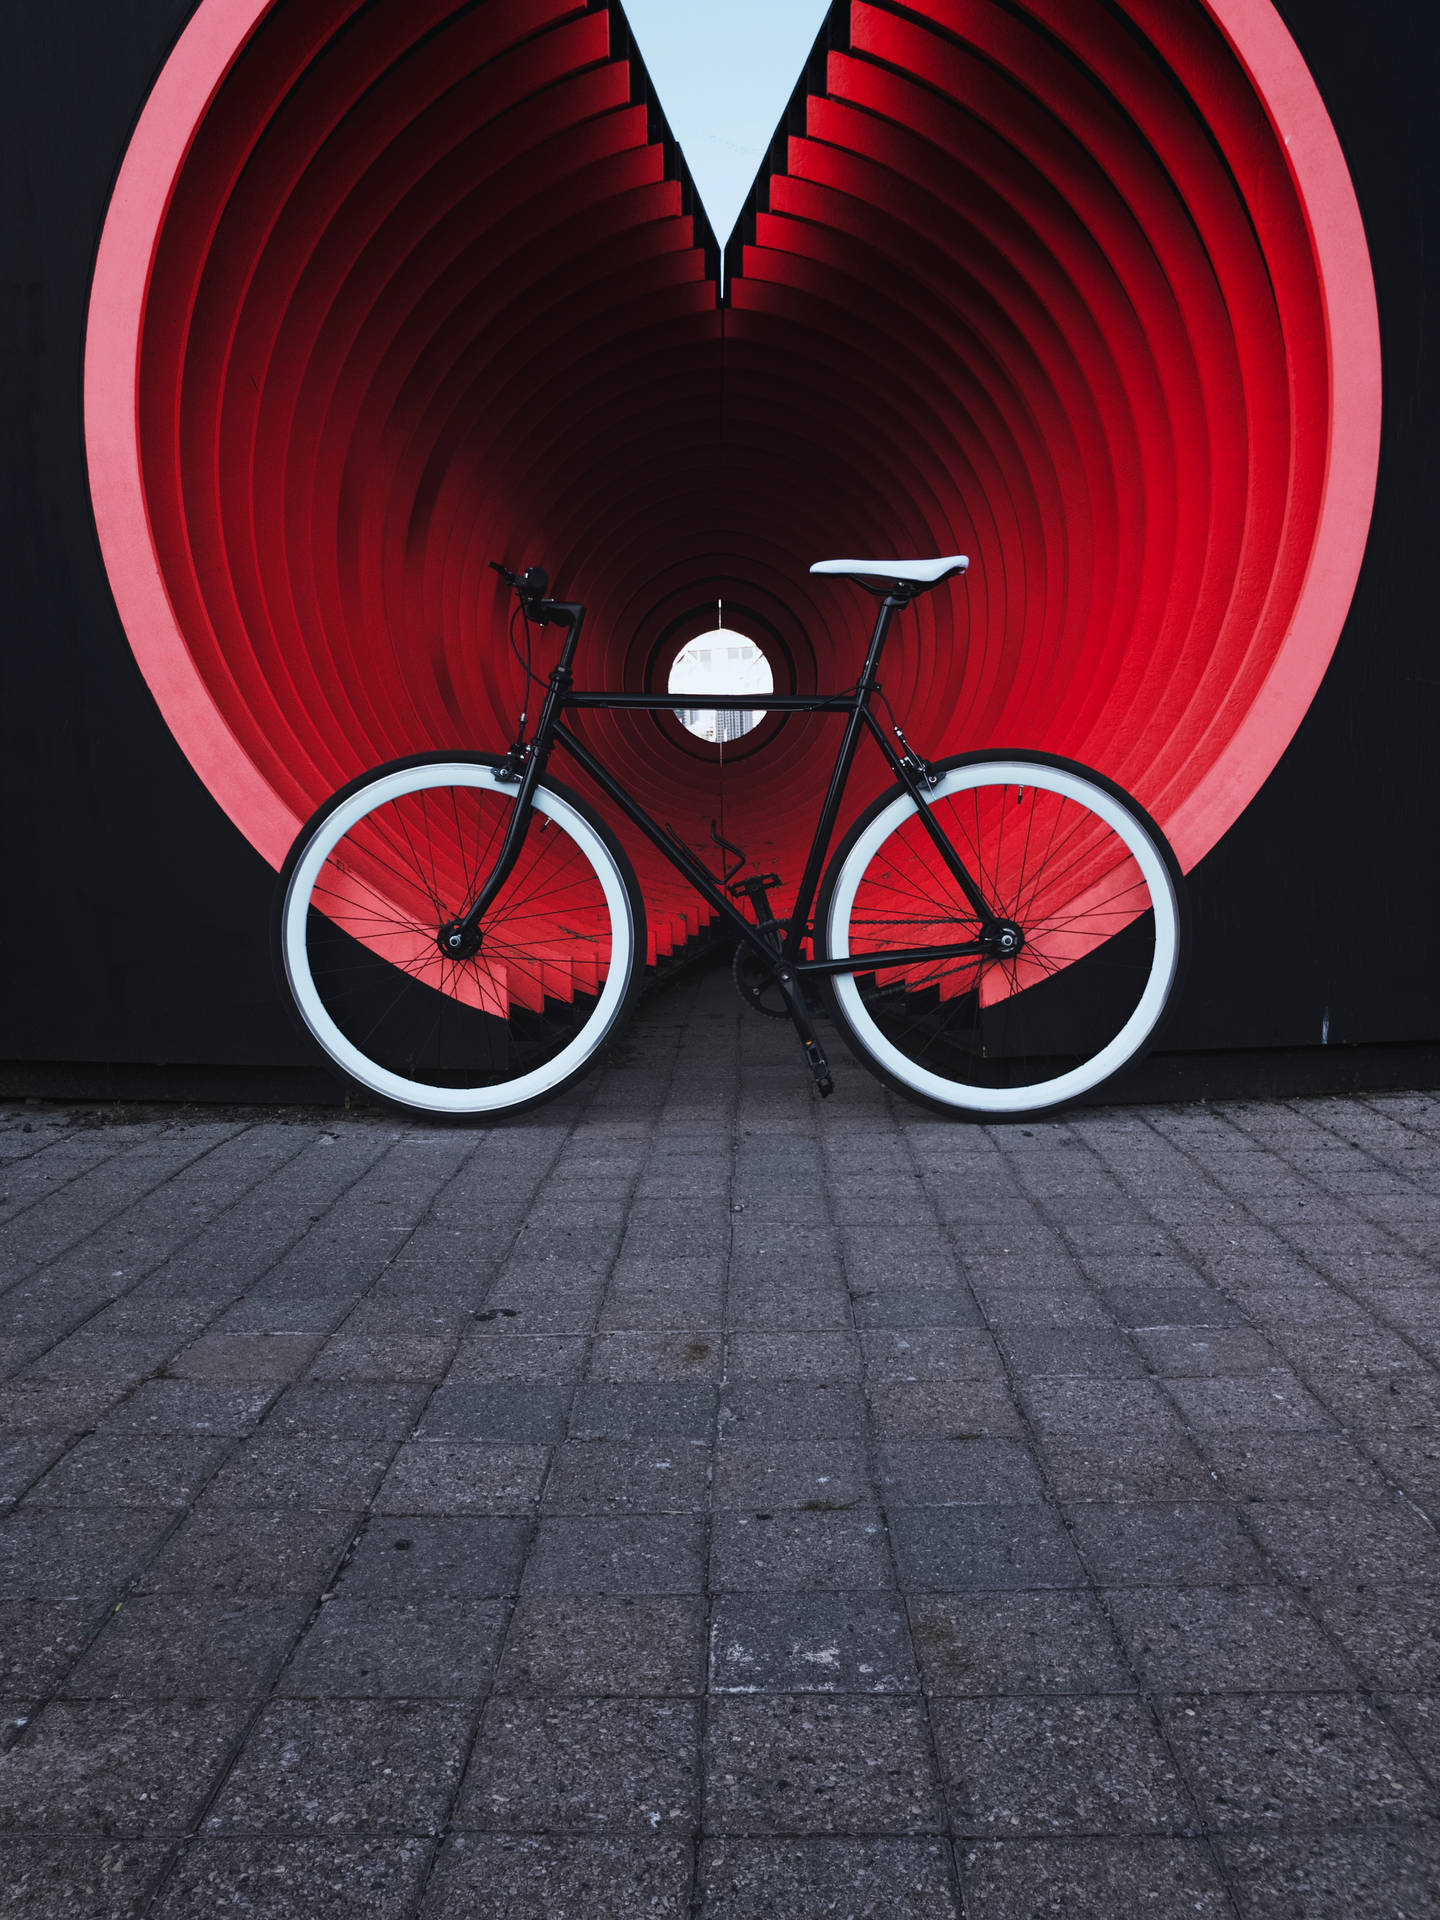 Bike Background Photos